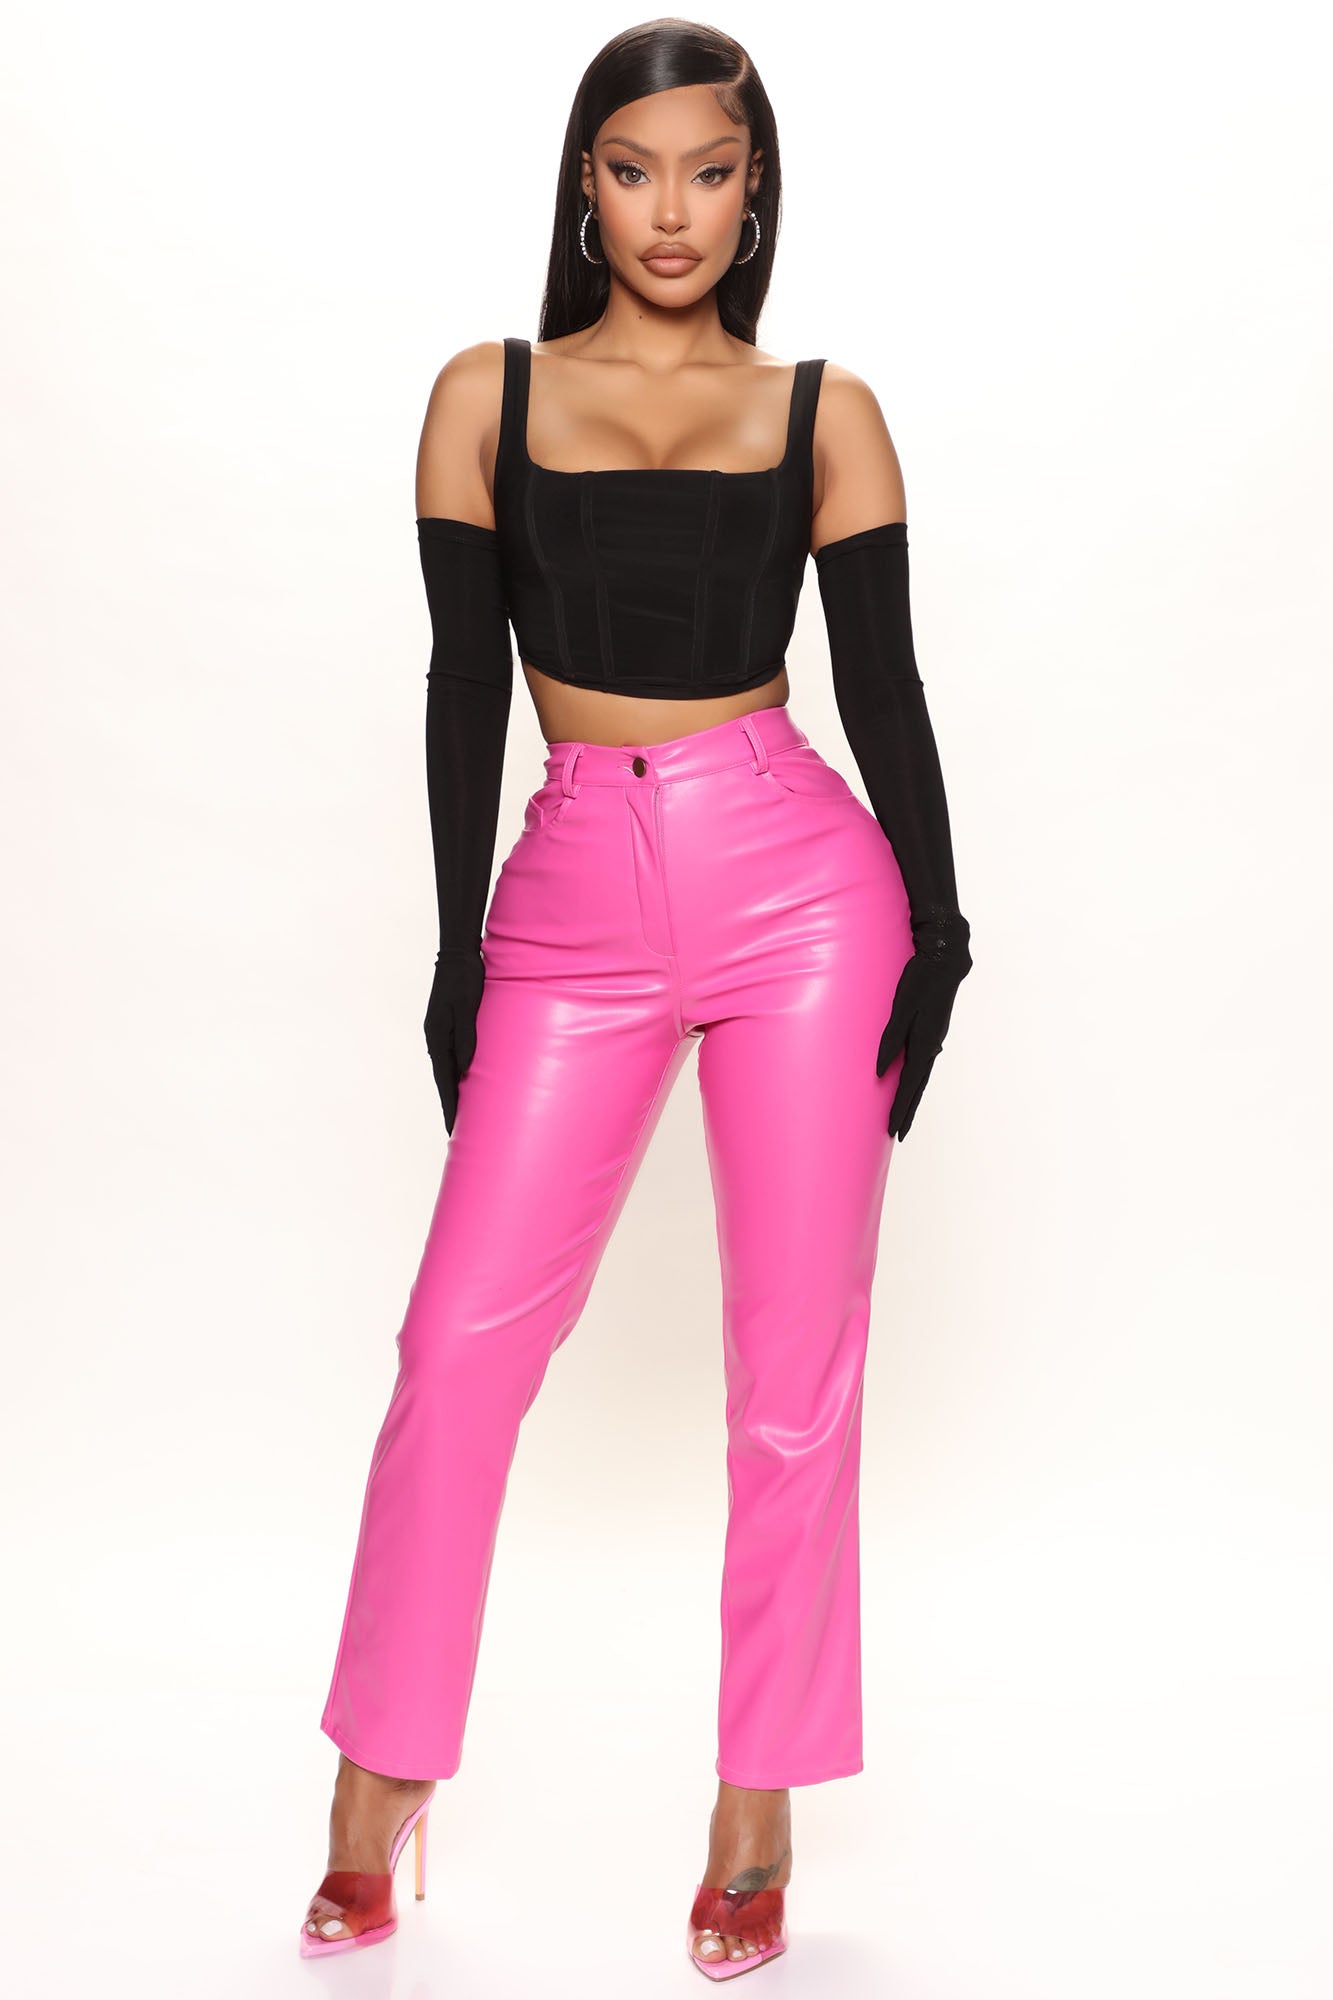 Late Night Texts Vinyl Pants  Pink  Fashion Nova Pants  Fashion Nova